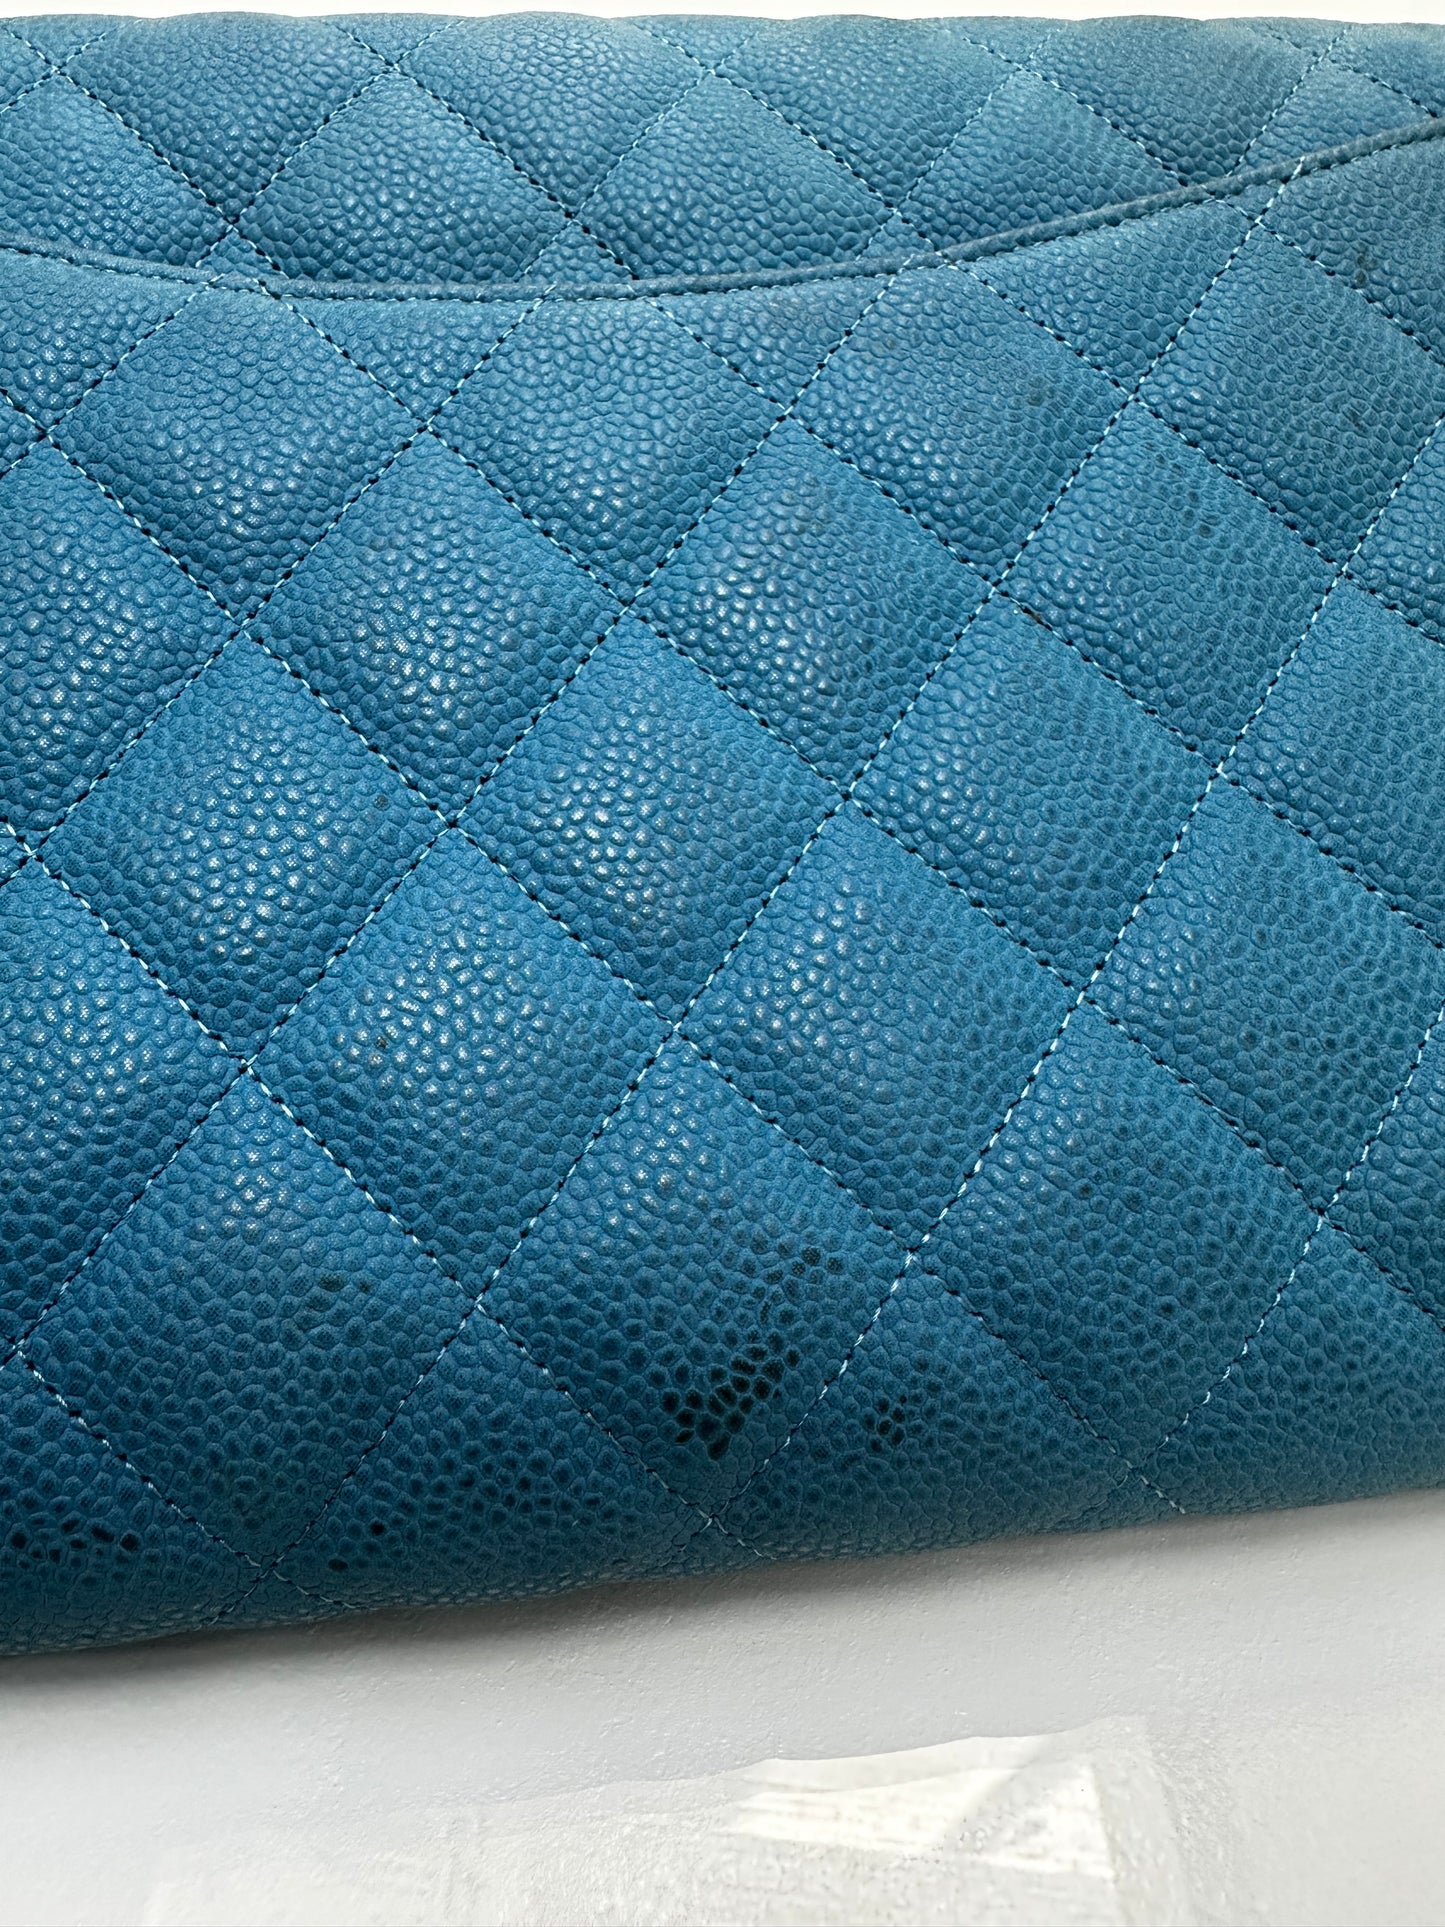 Chanel Blue Caviar Leather Clutch/Shoulder Bag SHW